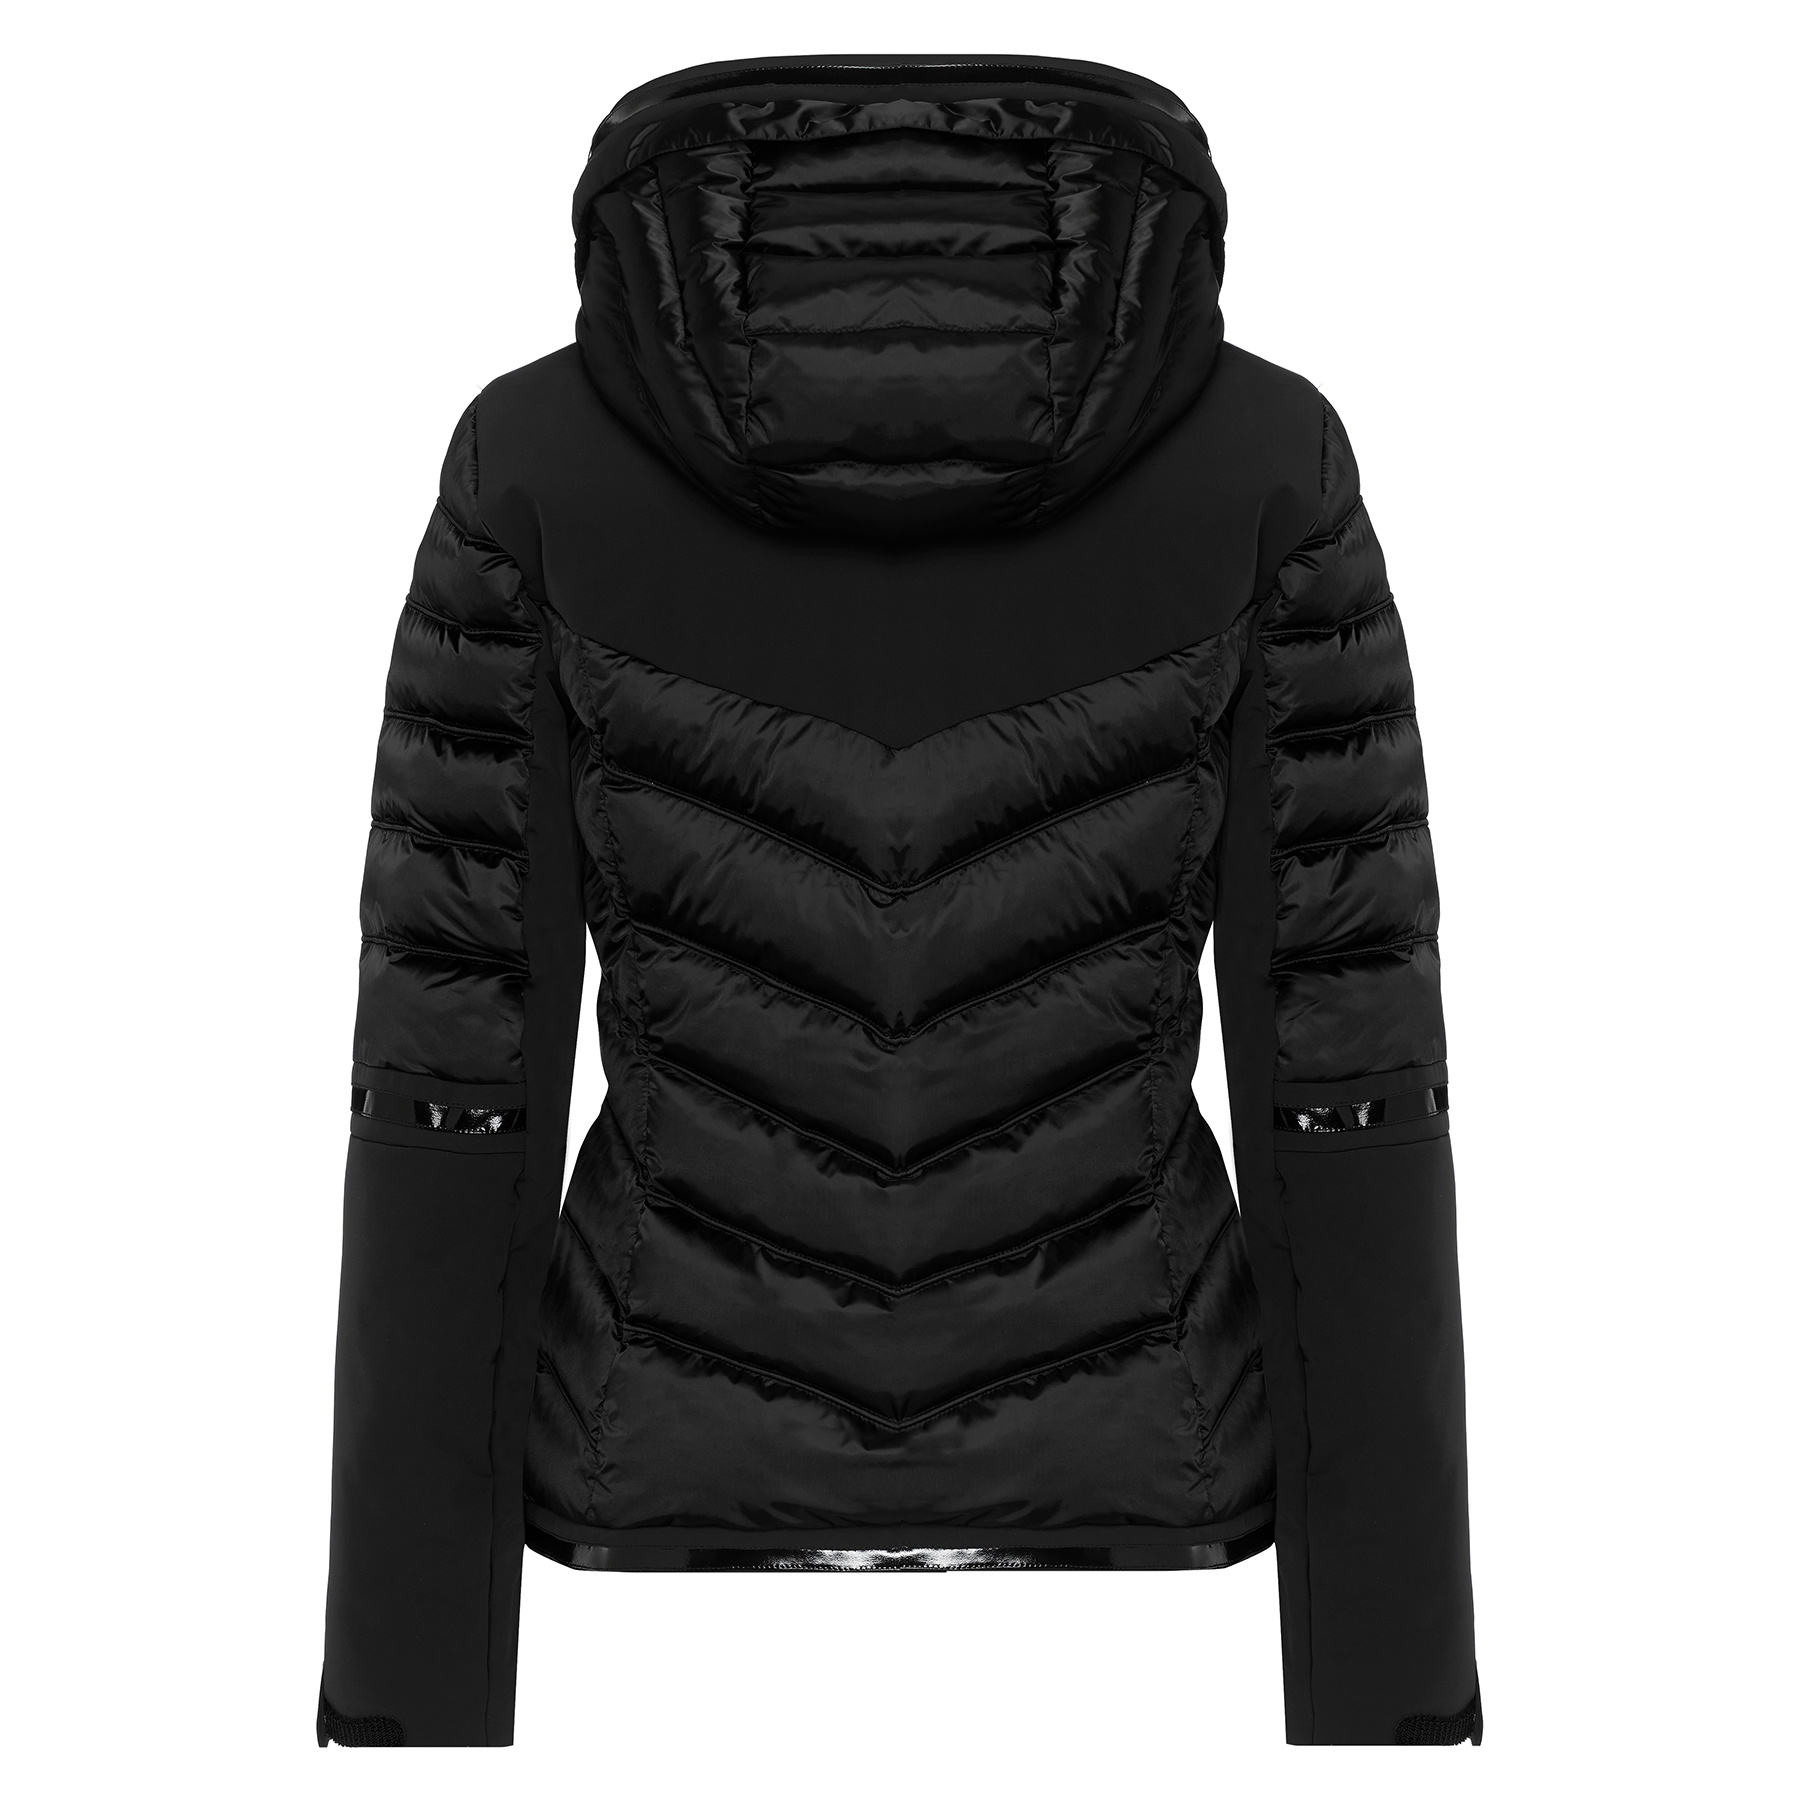 Toni Sailer Women’s Annie Splendid Jacket – Black - Free Style Sport